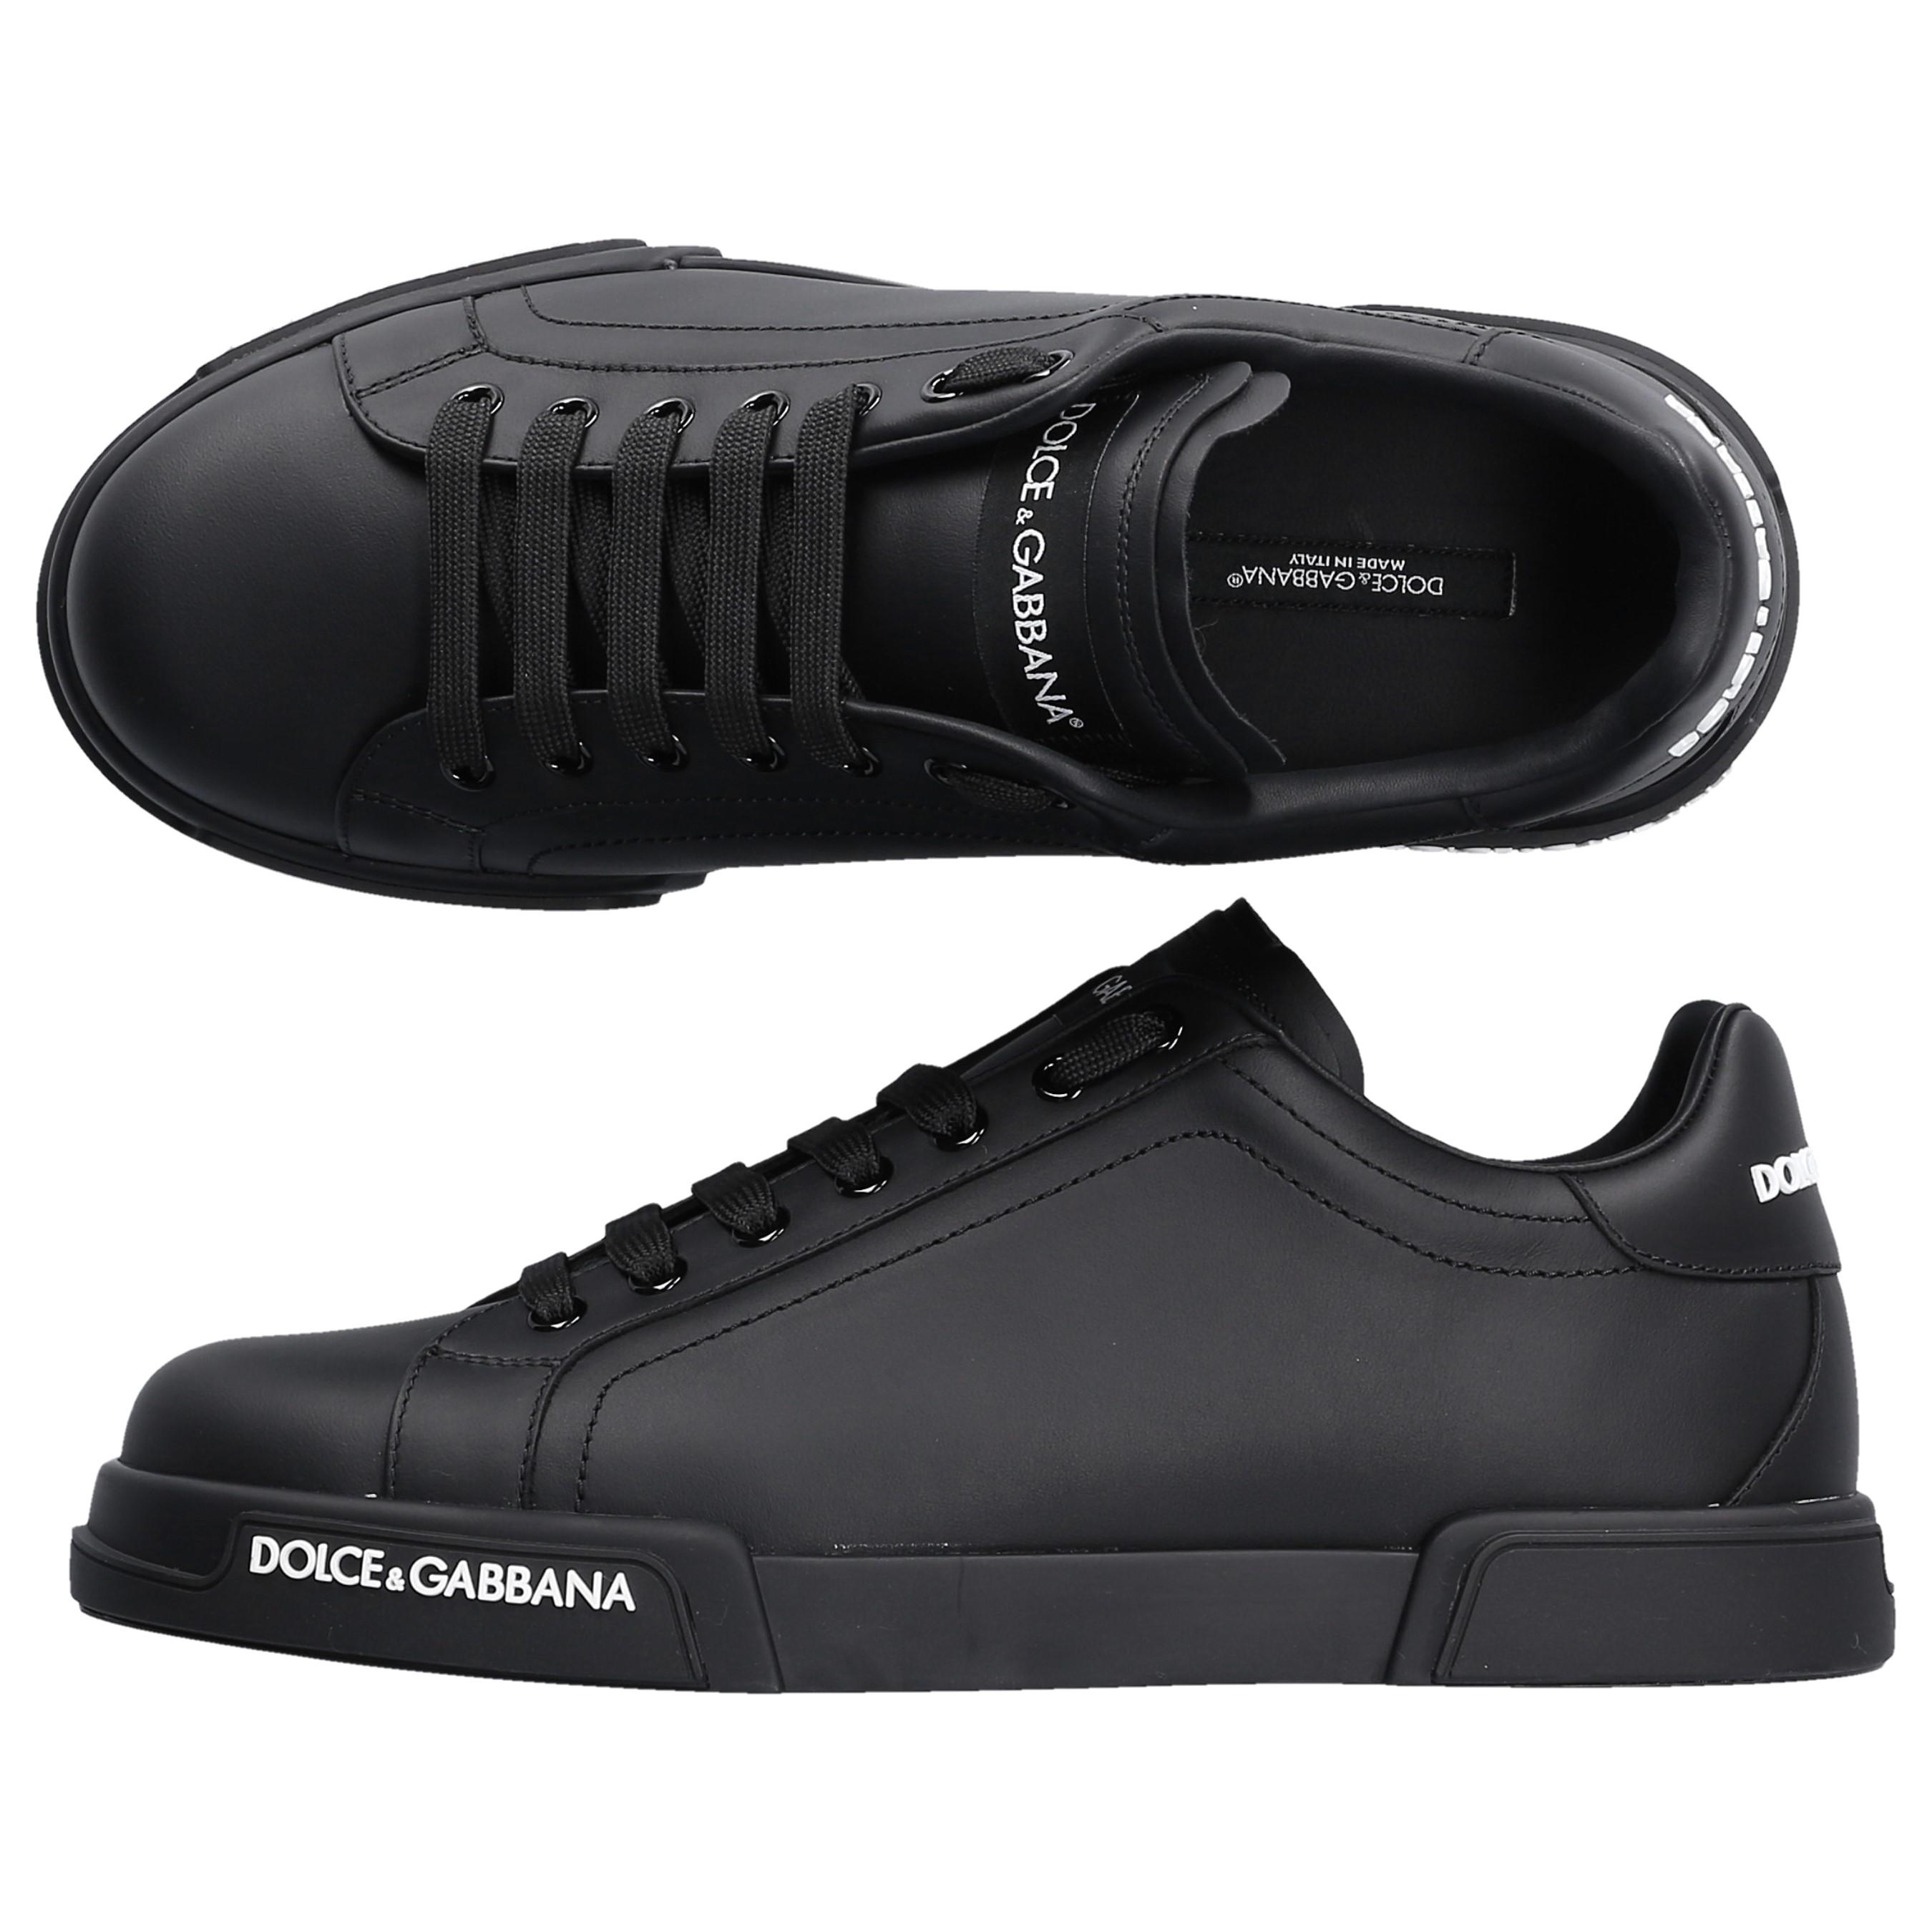 Dolce & Gabbana Leather Sneakers Black Portofino for Men - Lyst